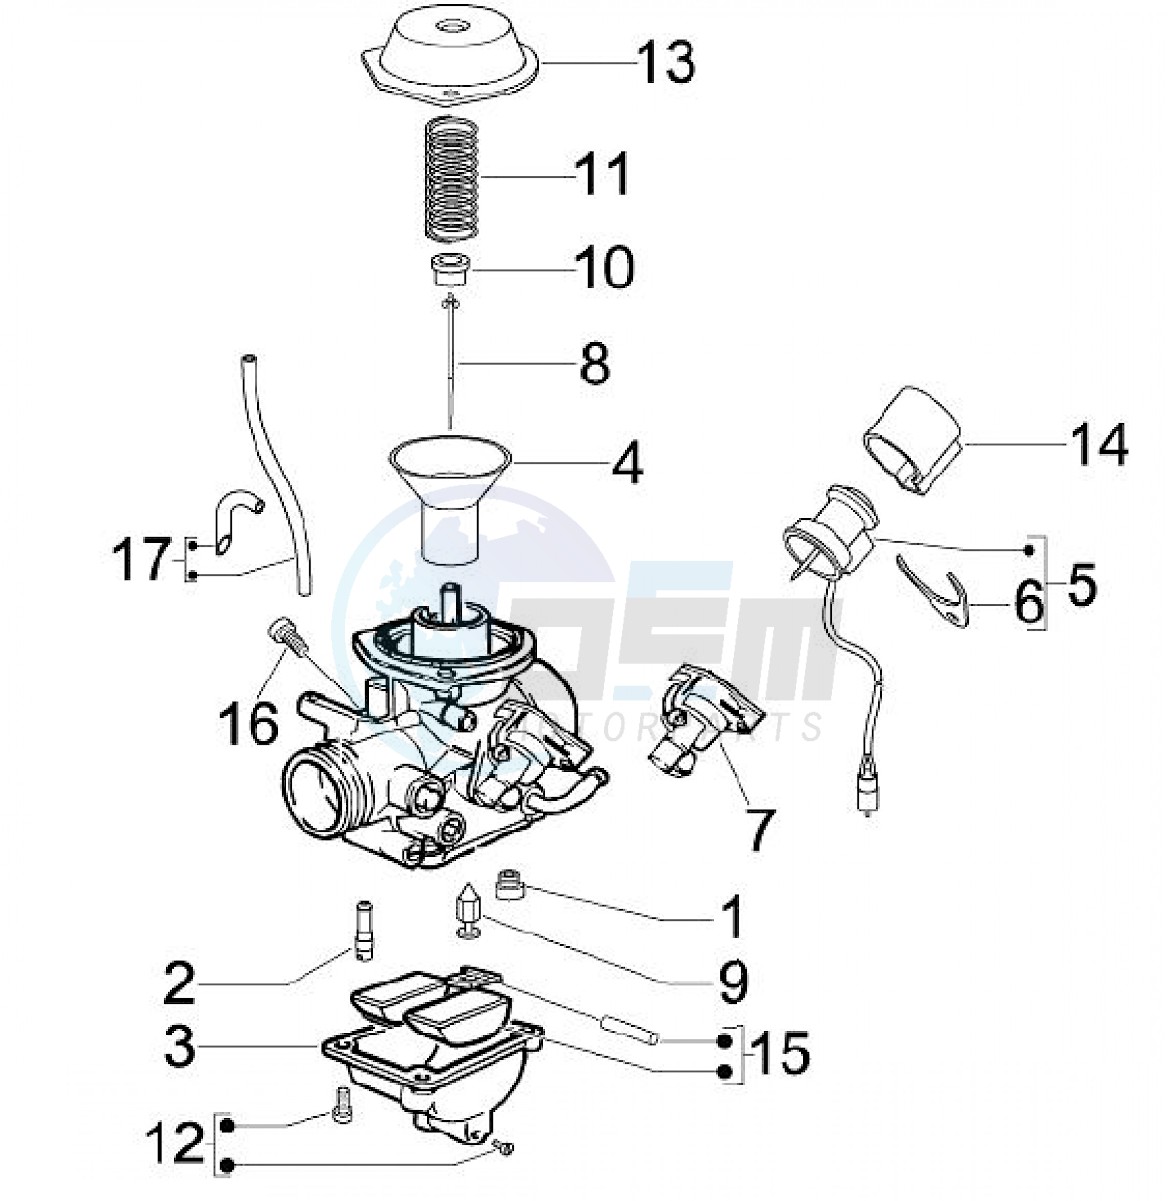 Carburetor components (Positions) image